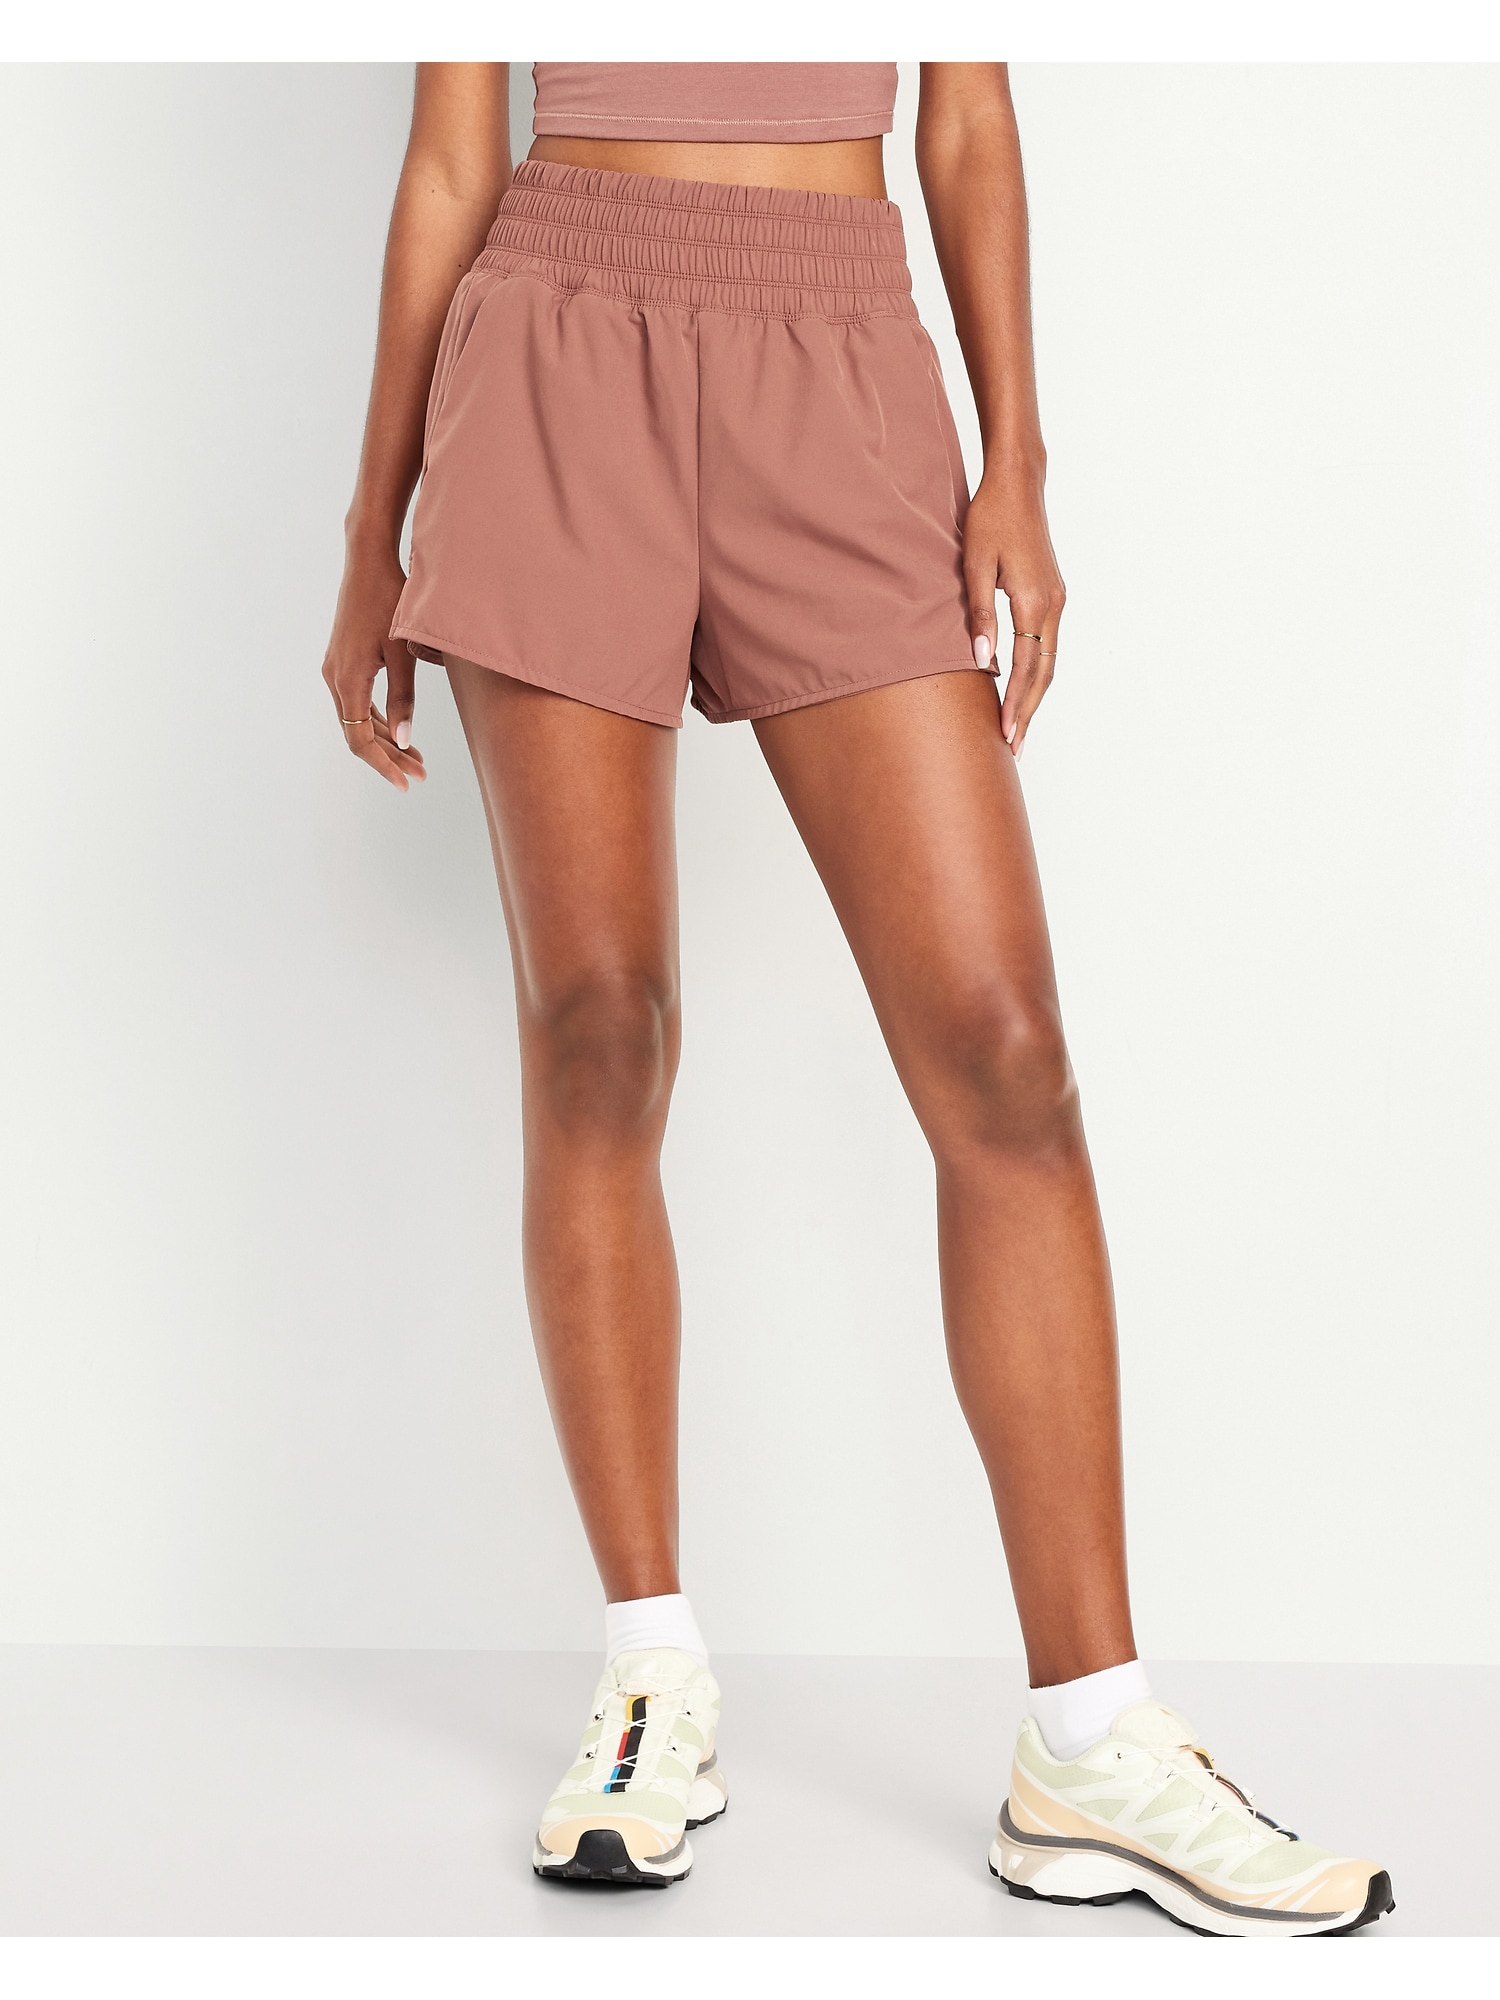 Extra High-Waisted Run Shorts -- 3-inch inseam Hot Deal